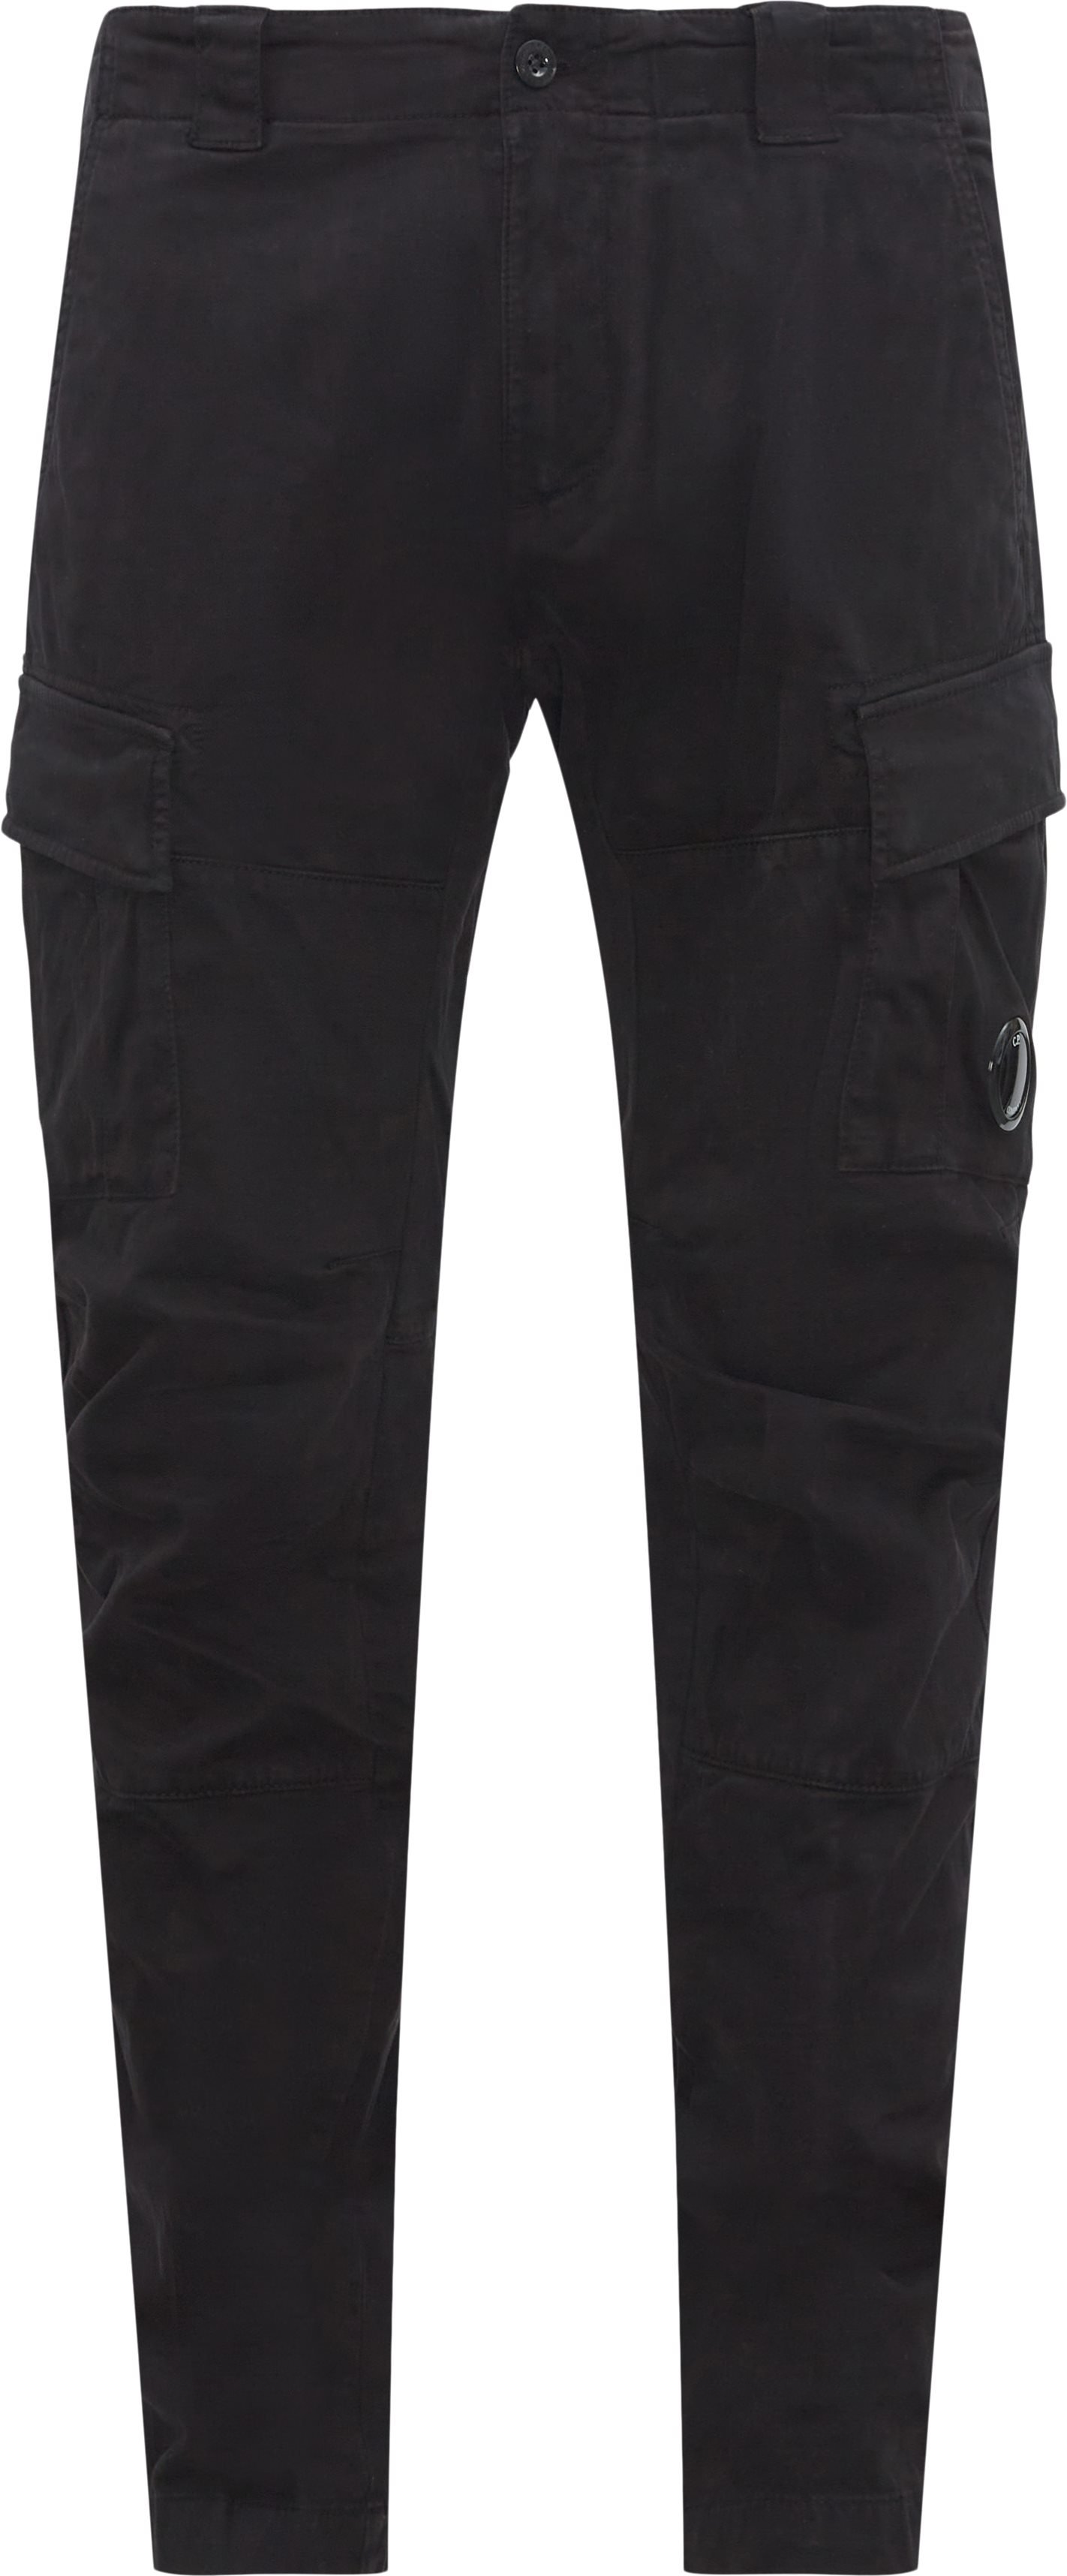 C.P. Company Trousers PA186A 5529G Black